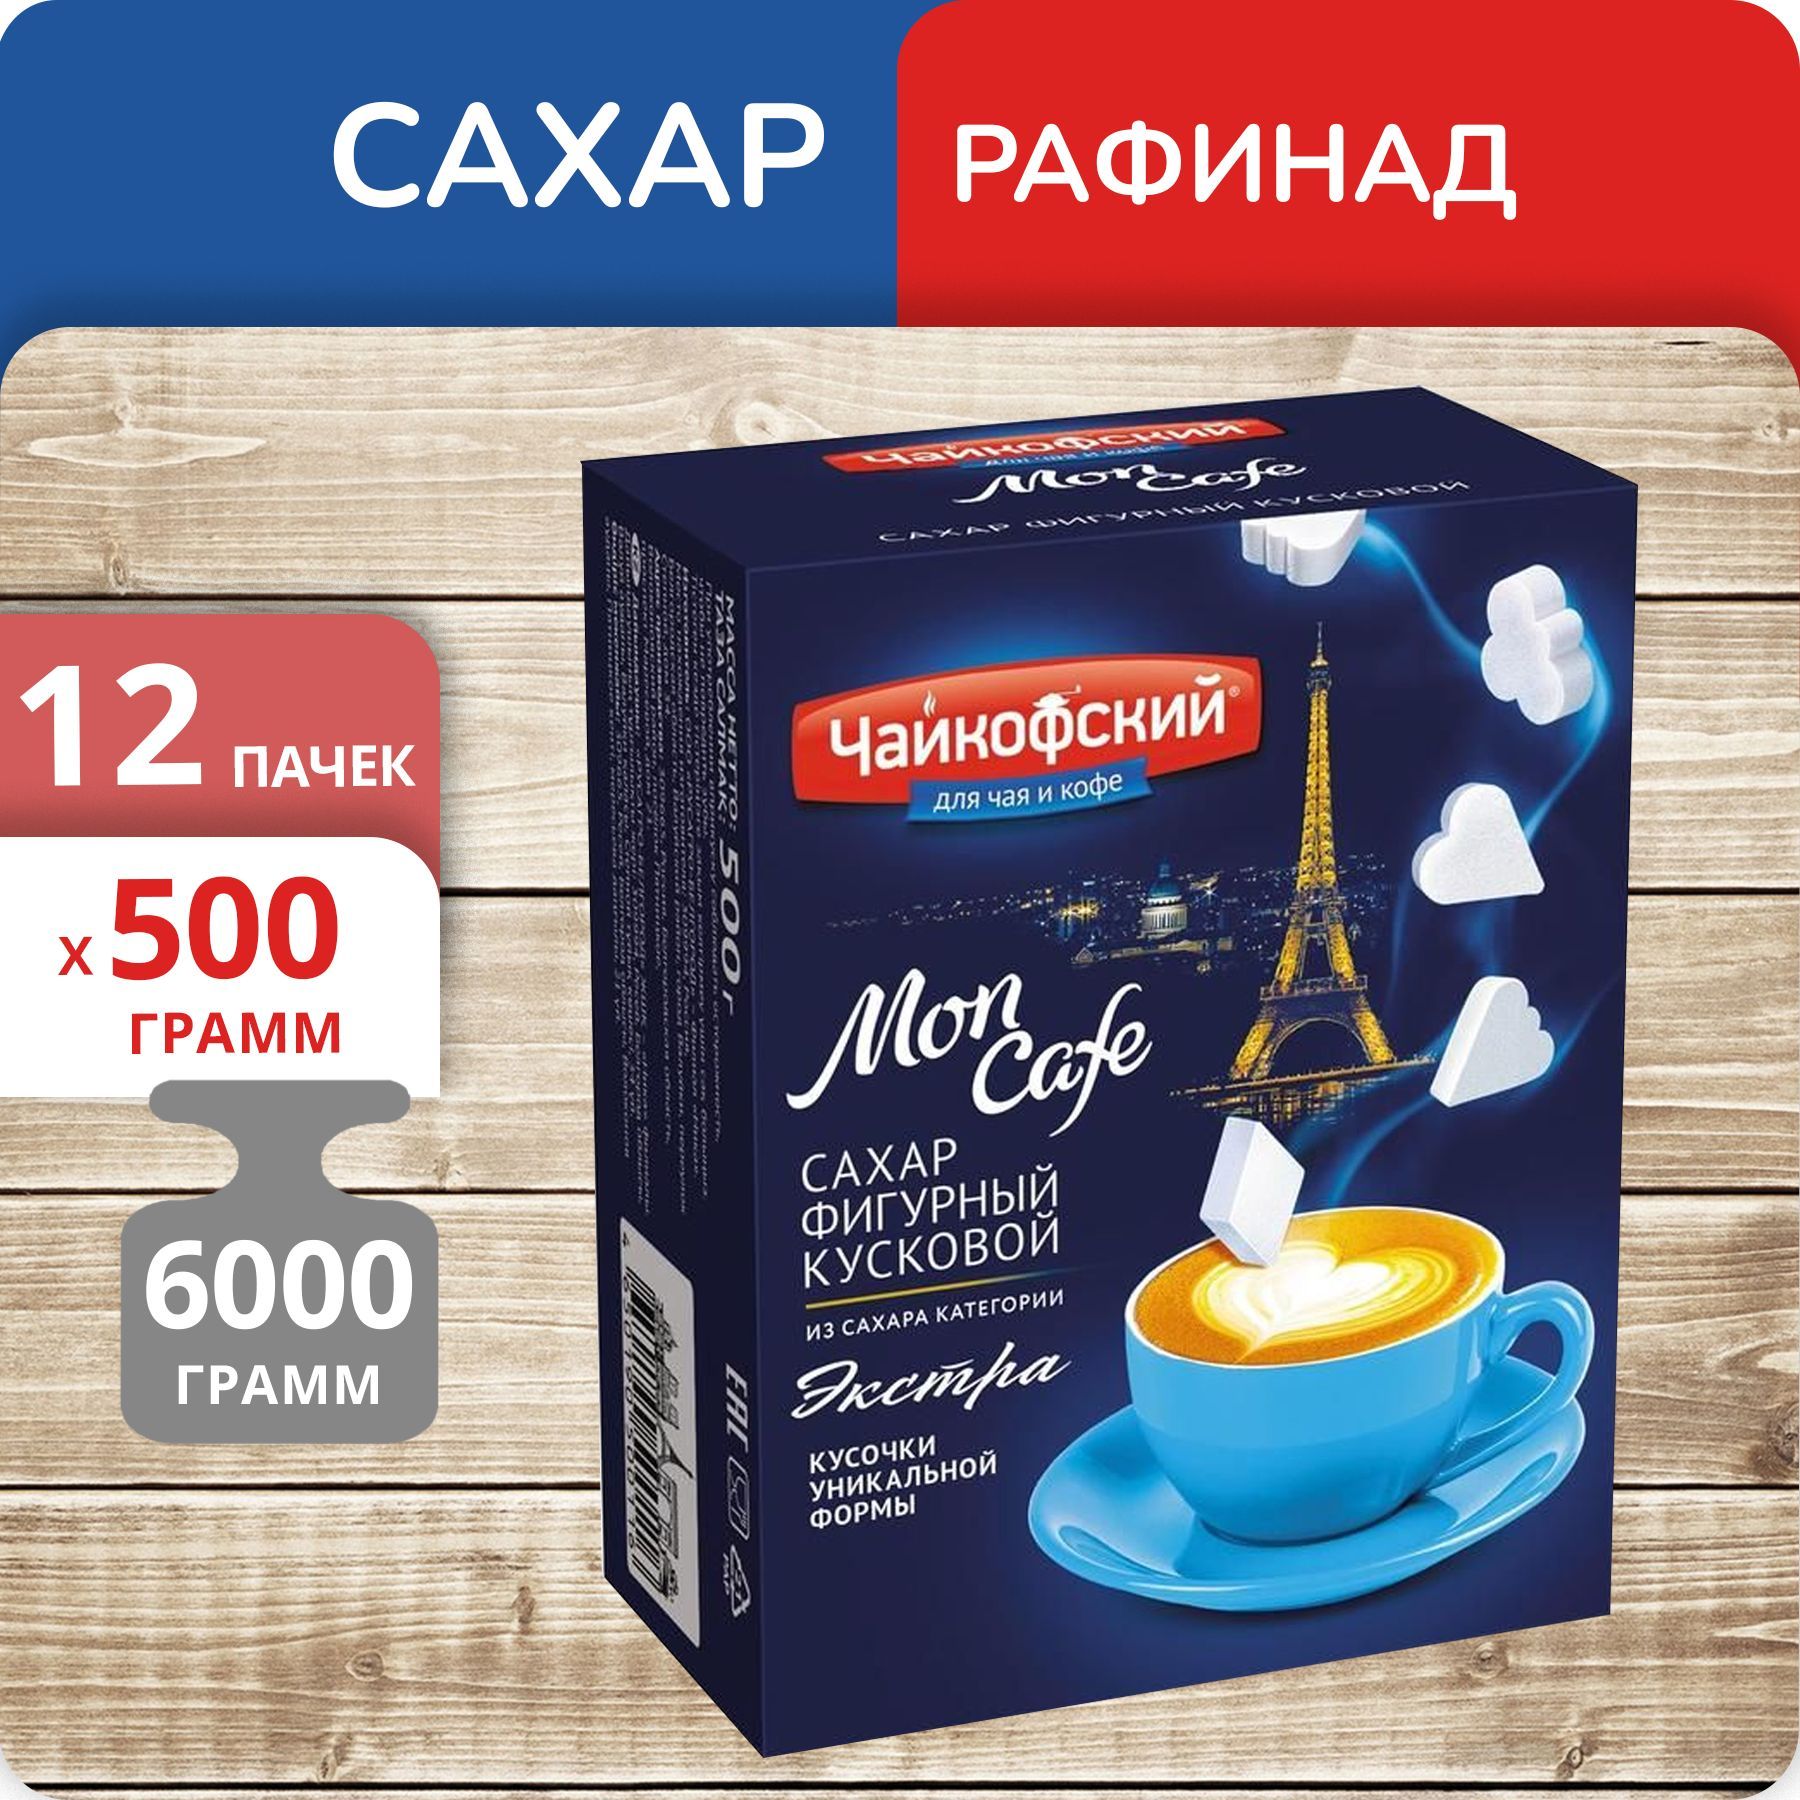 Сахар-рафинад Чайкофский фигурный Mon Cafe Экстра, 500 г х 12 шт